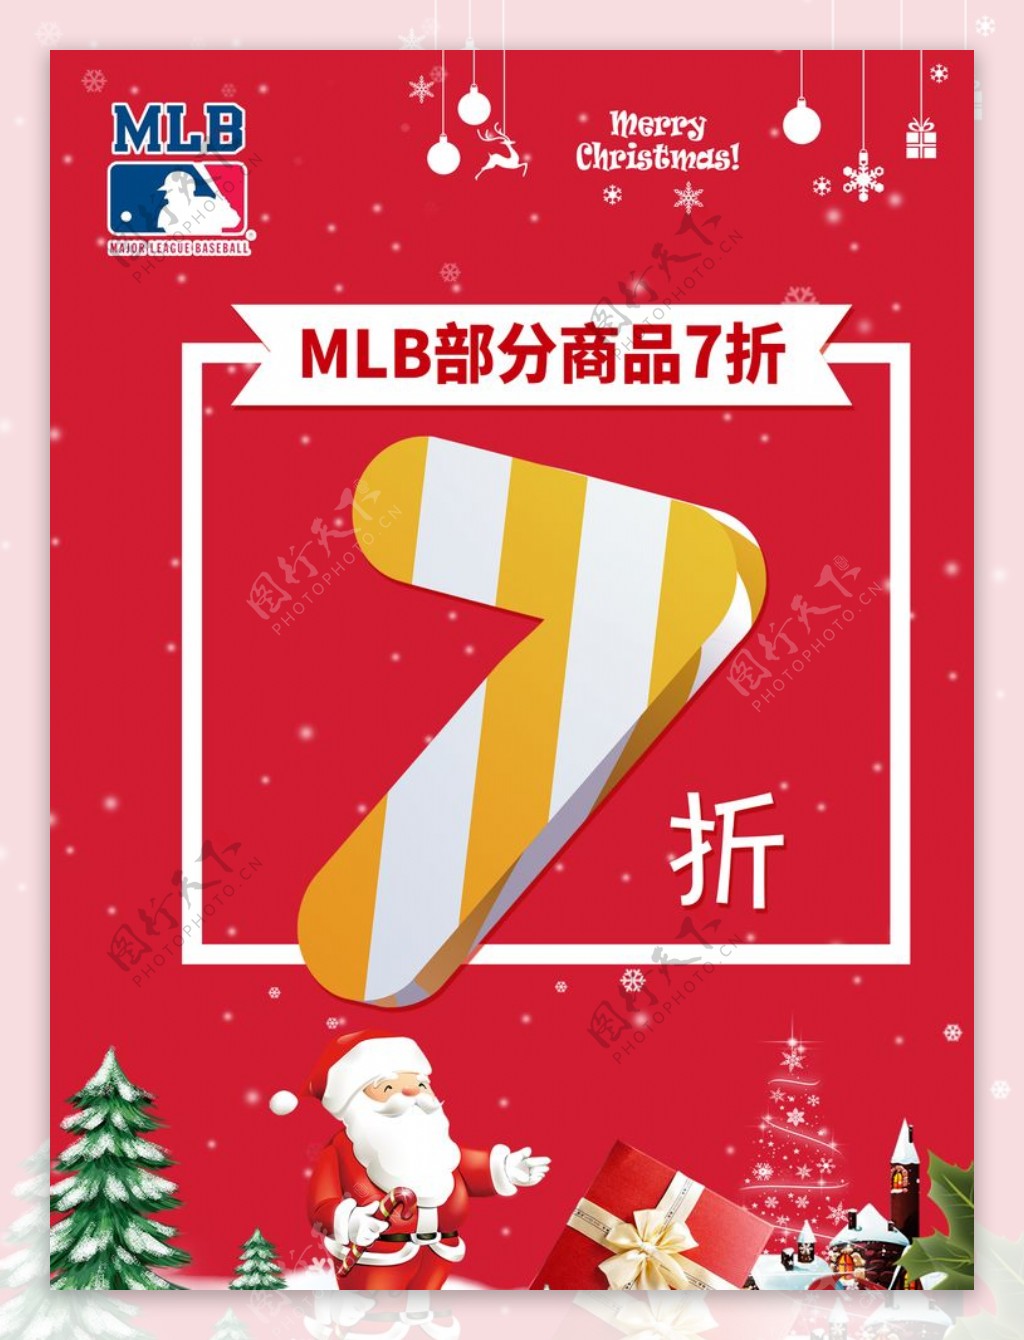 MLB圣诞活动7折